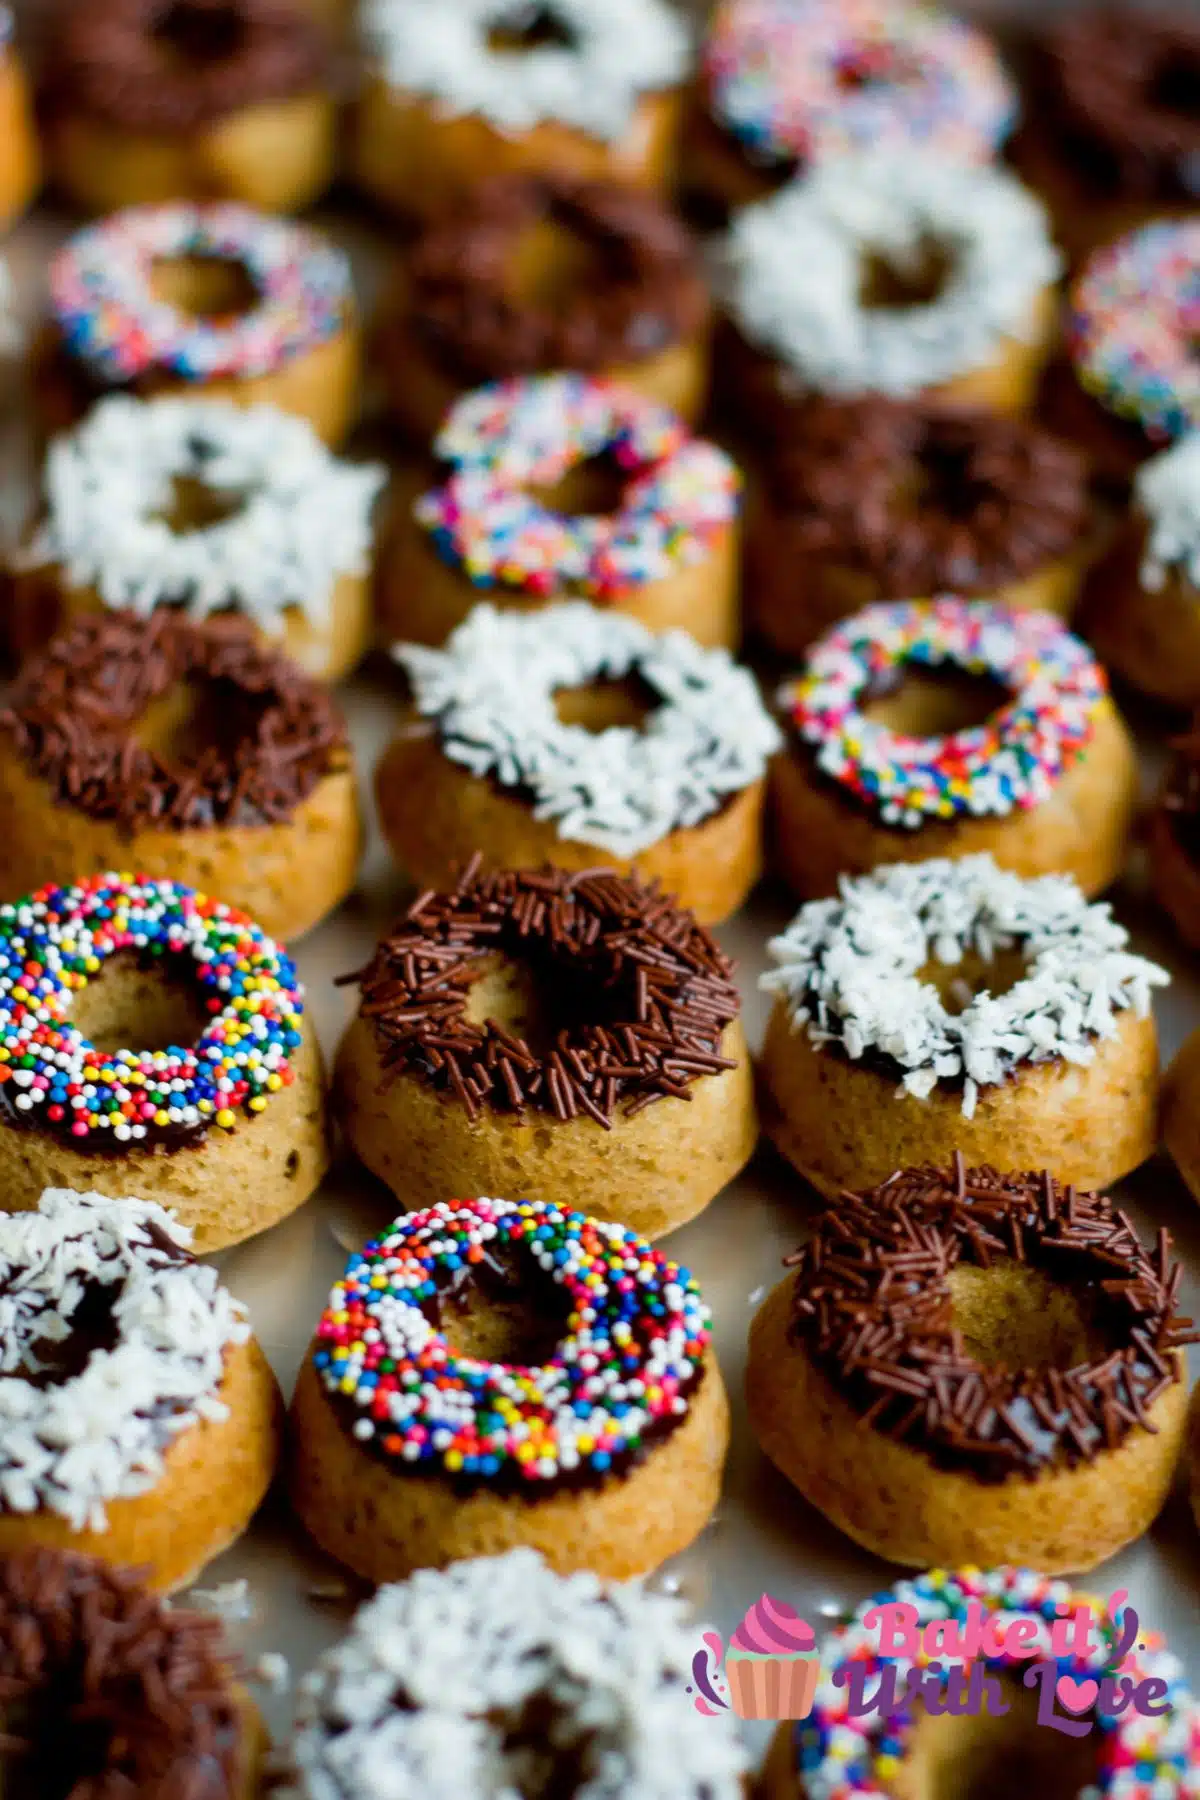 Tall image of donut varieties.